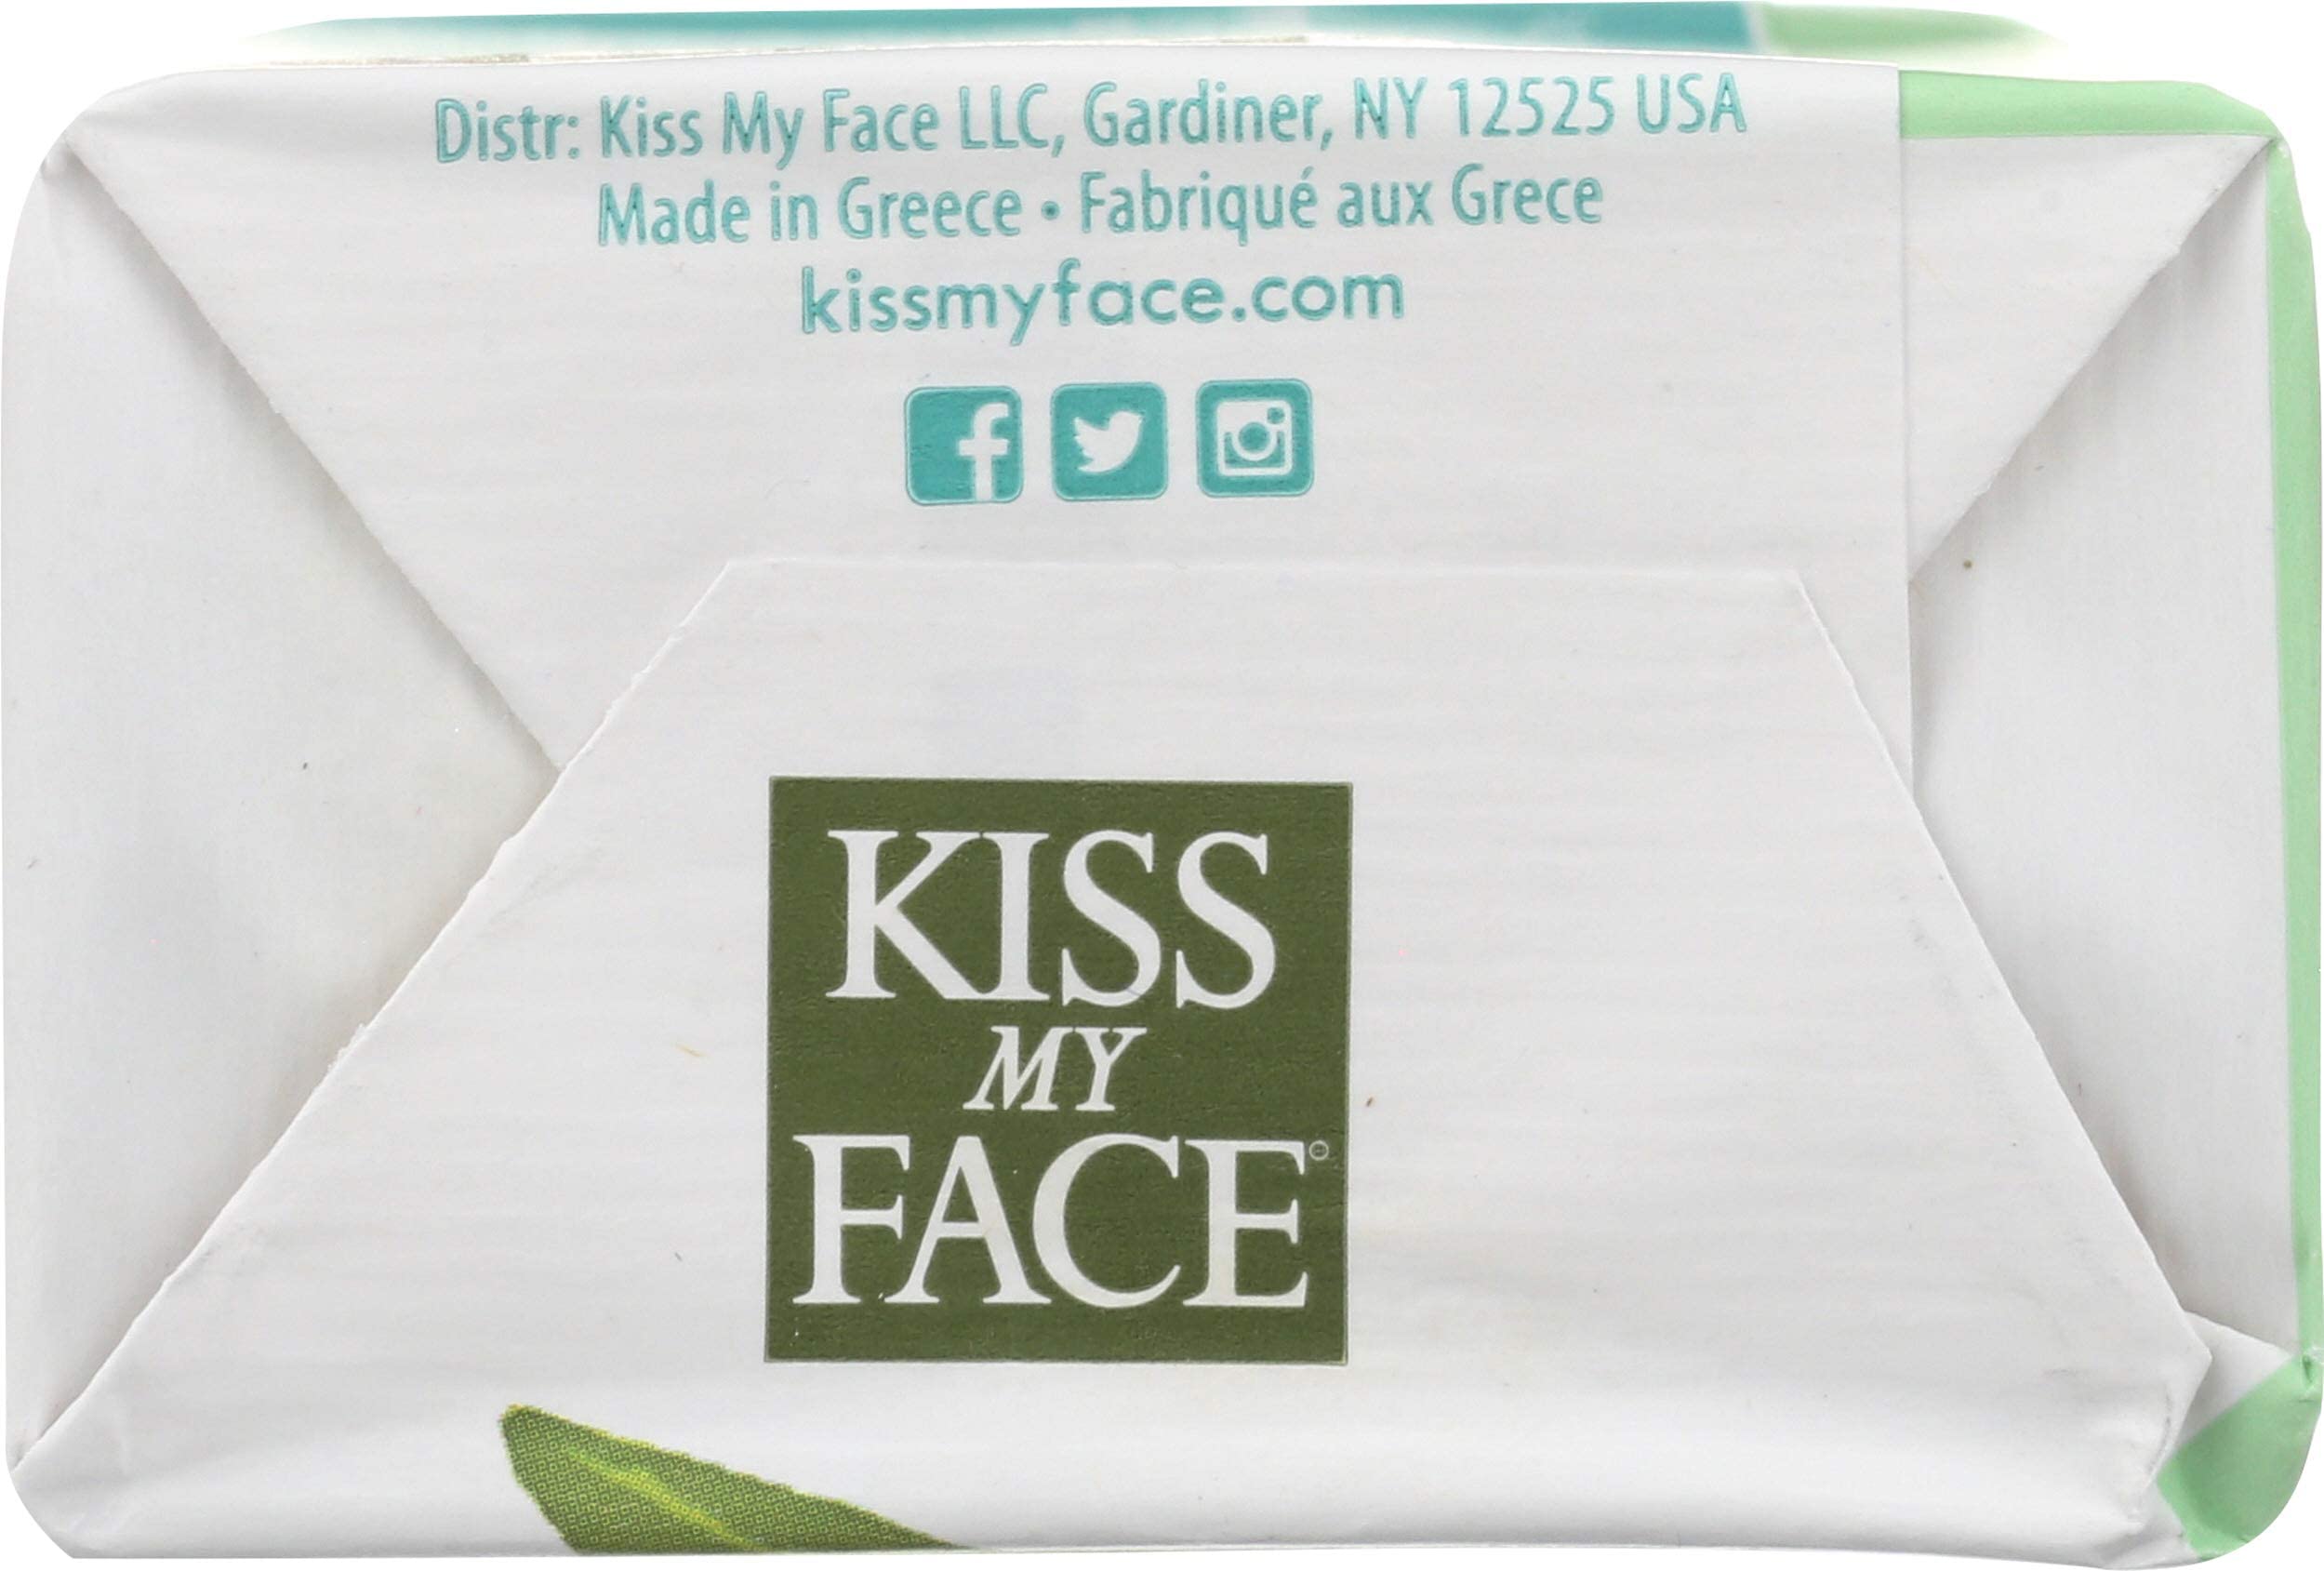 Kiss My Face Moisturizing Bar Soap for All Skin Types - Olive & Aloe - 8 oz